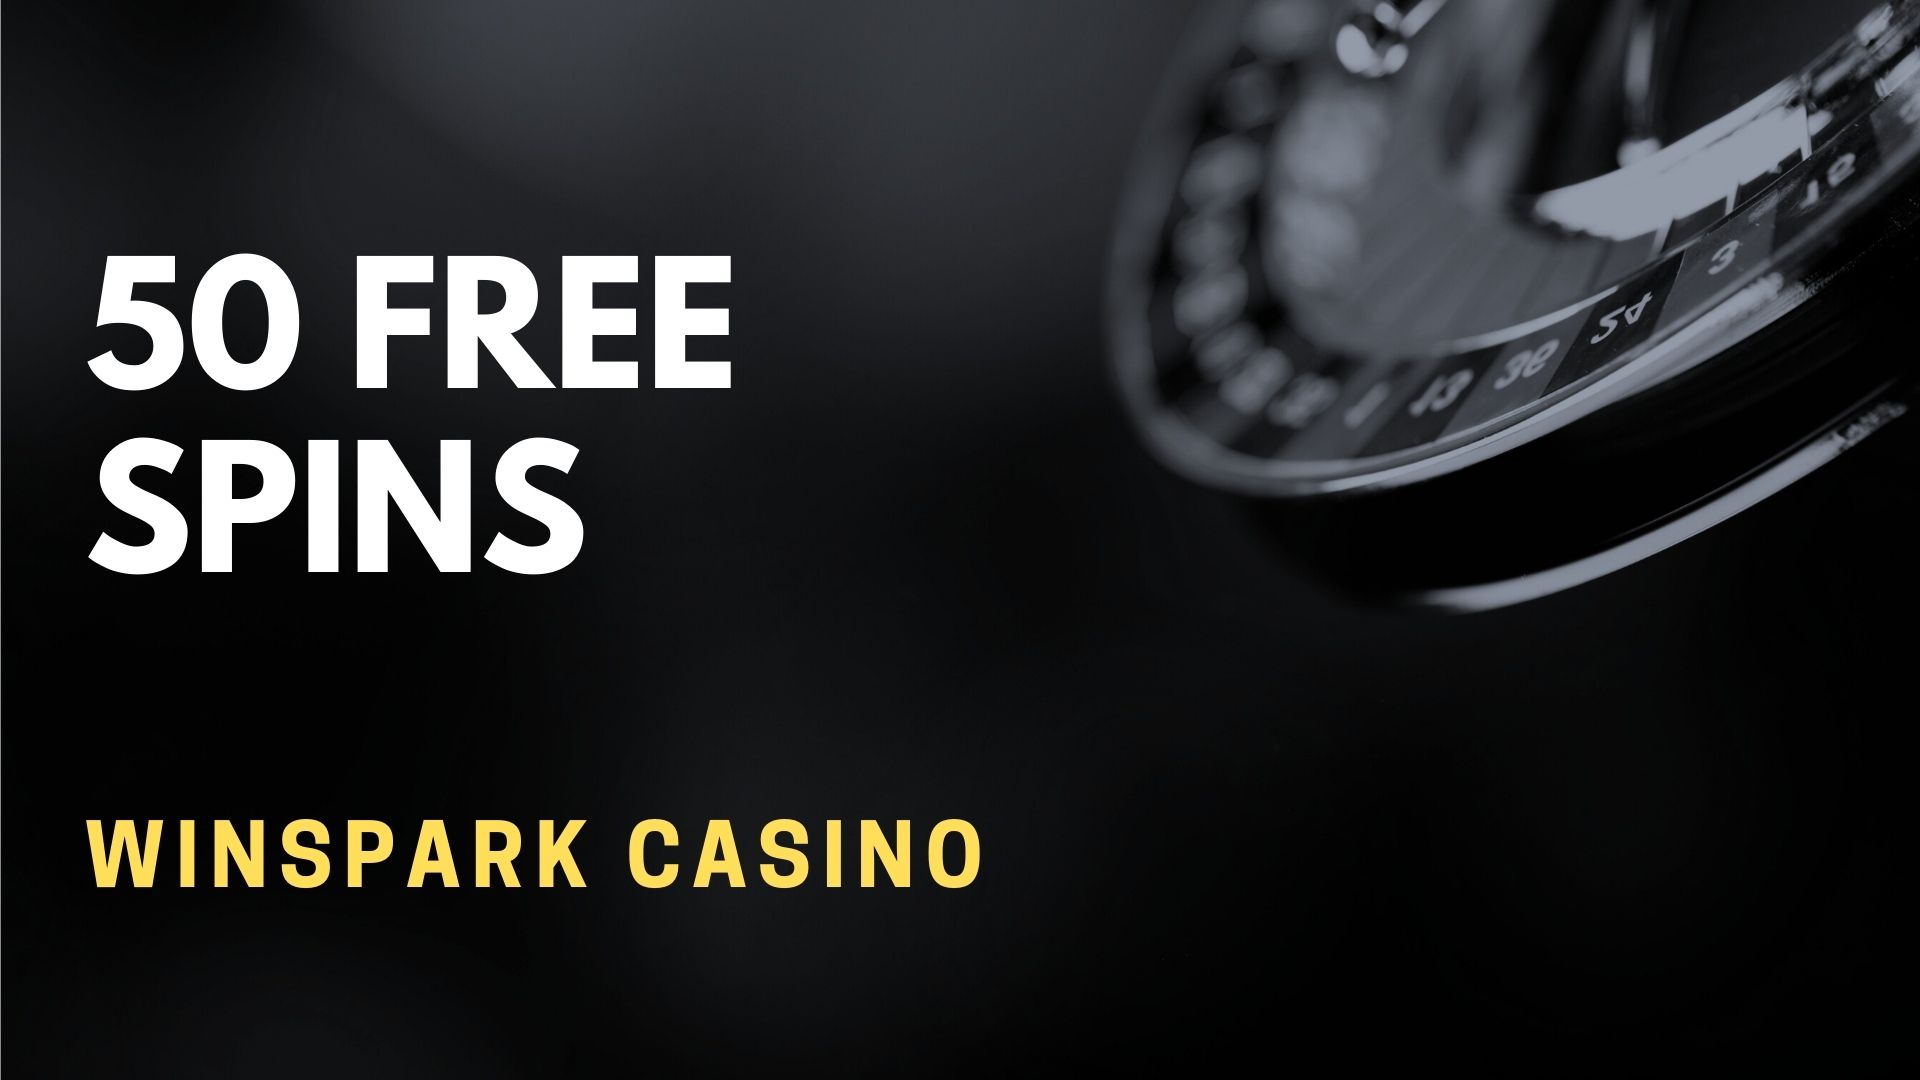 WinsPark Casino 50 free spins or €5 gratis no deposit required